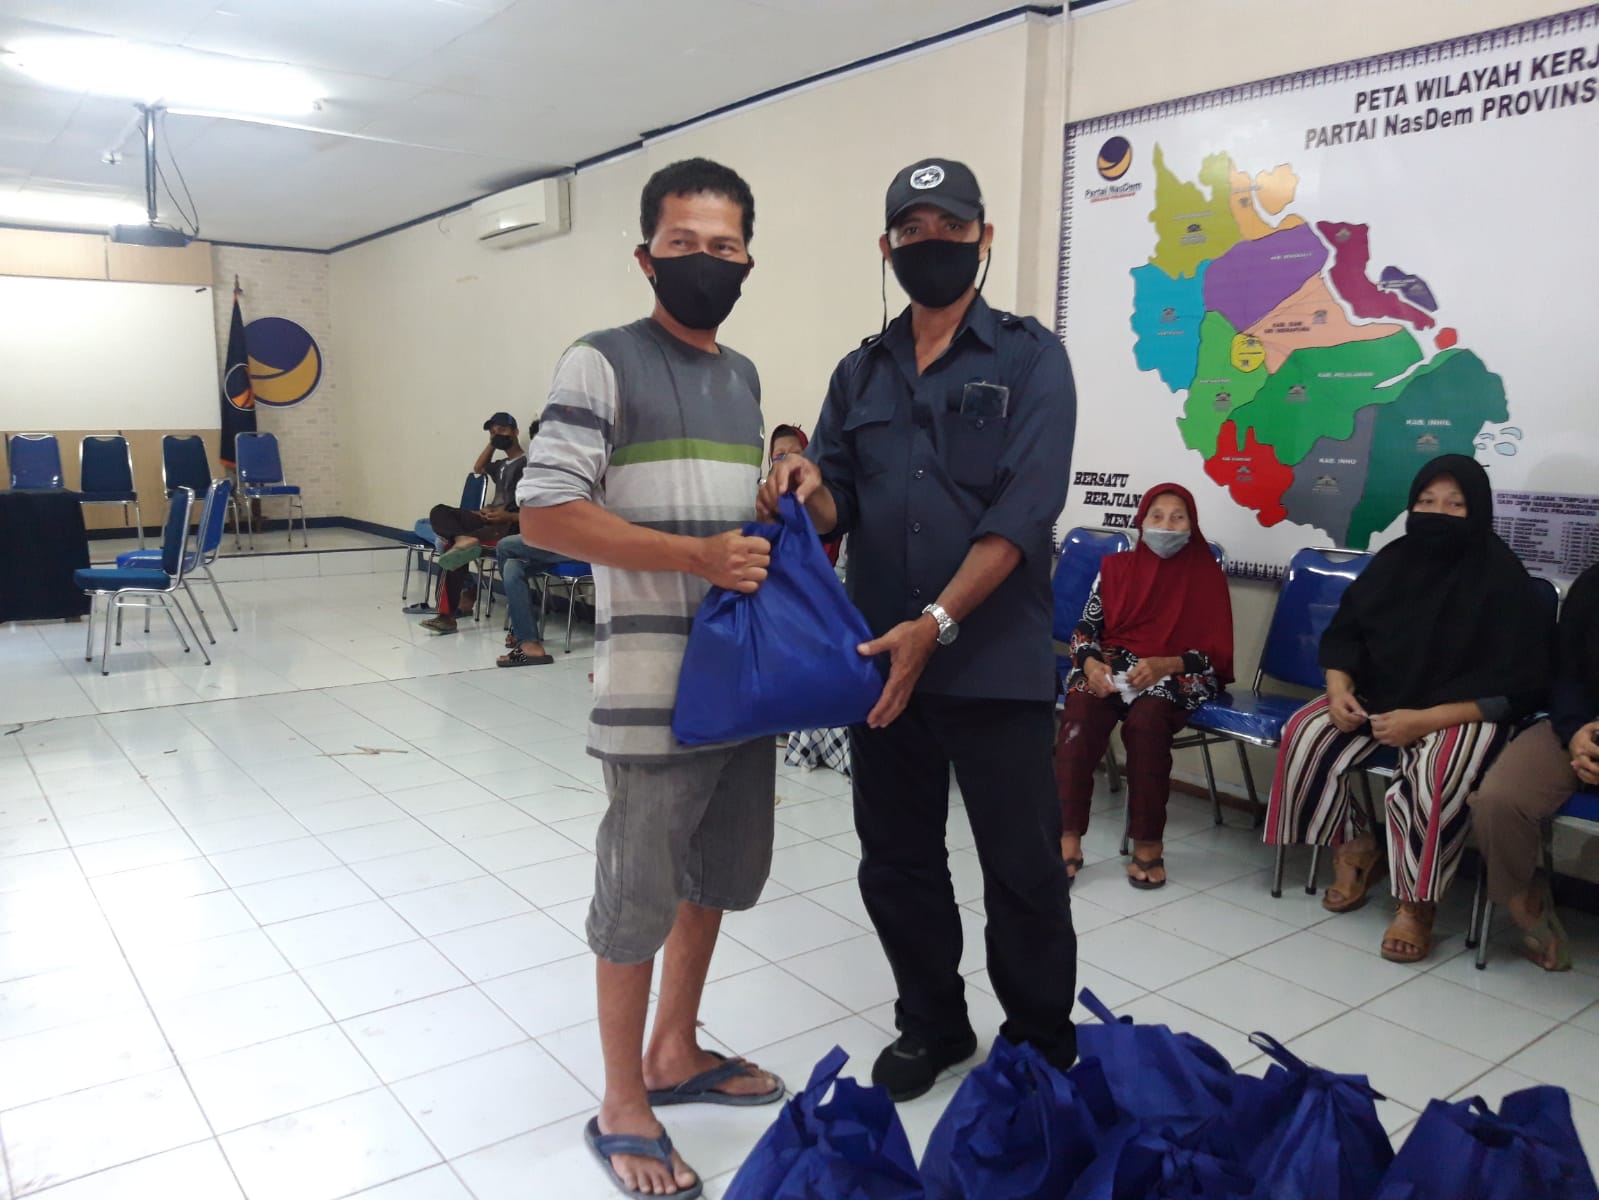 DPW Partai NasDem Riau bagikan 1000 Paket Sembako Untuk Warga Kurang Mampu